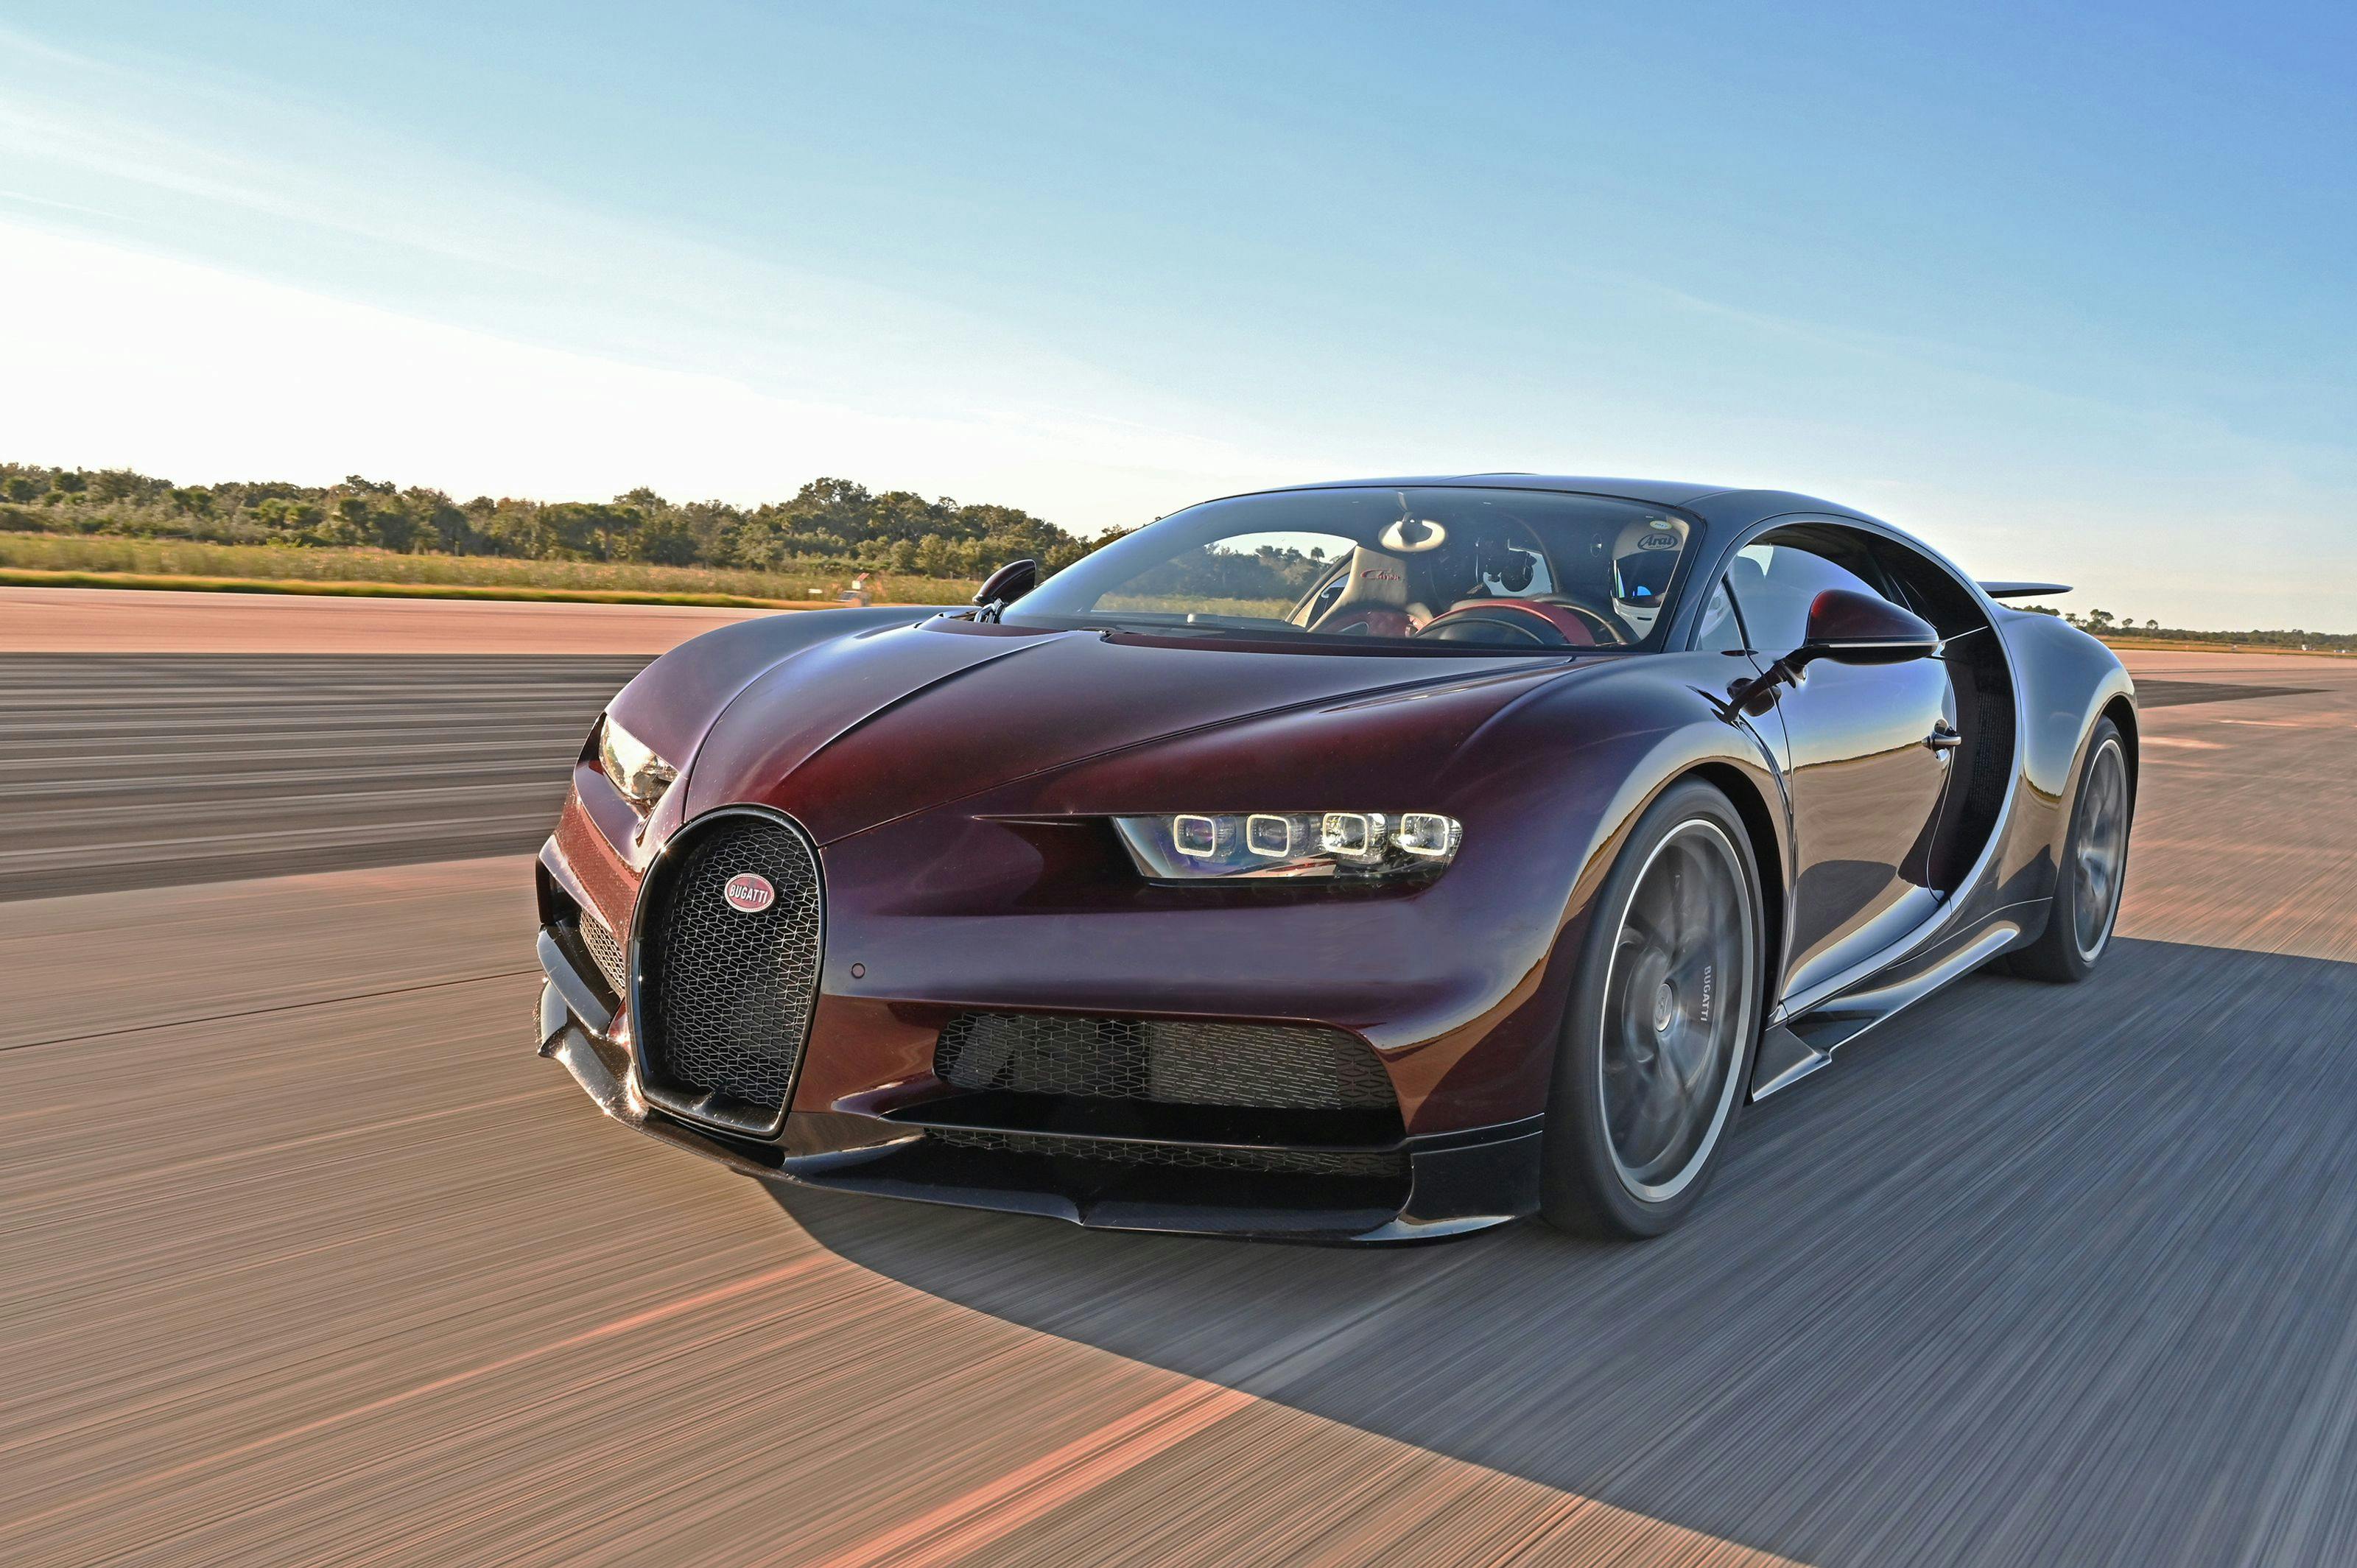 Bugatti Chiron: “Out of This World”